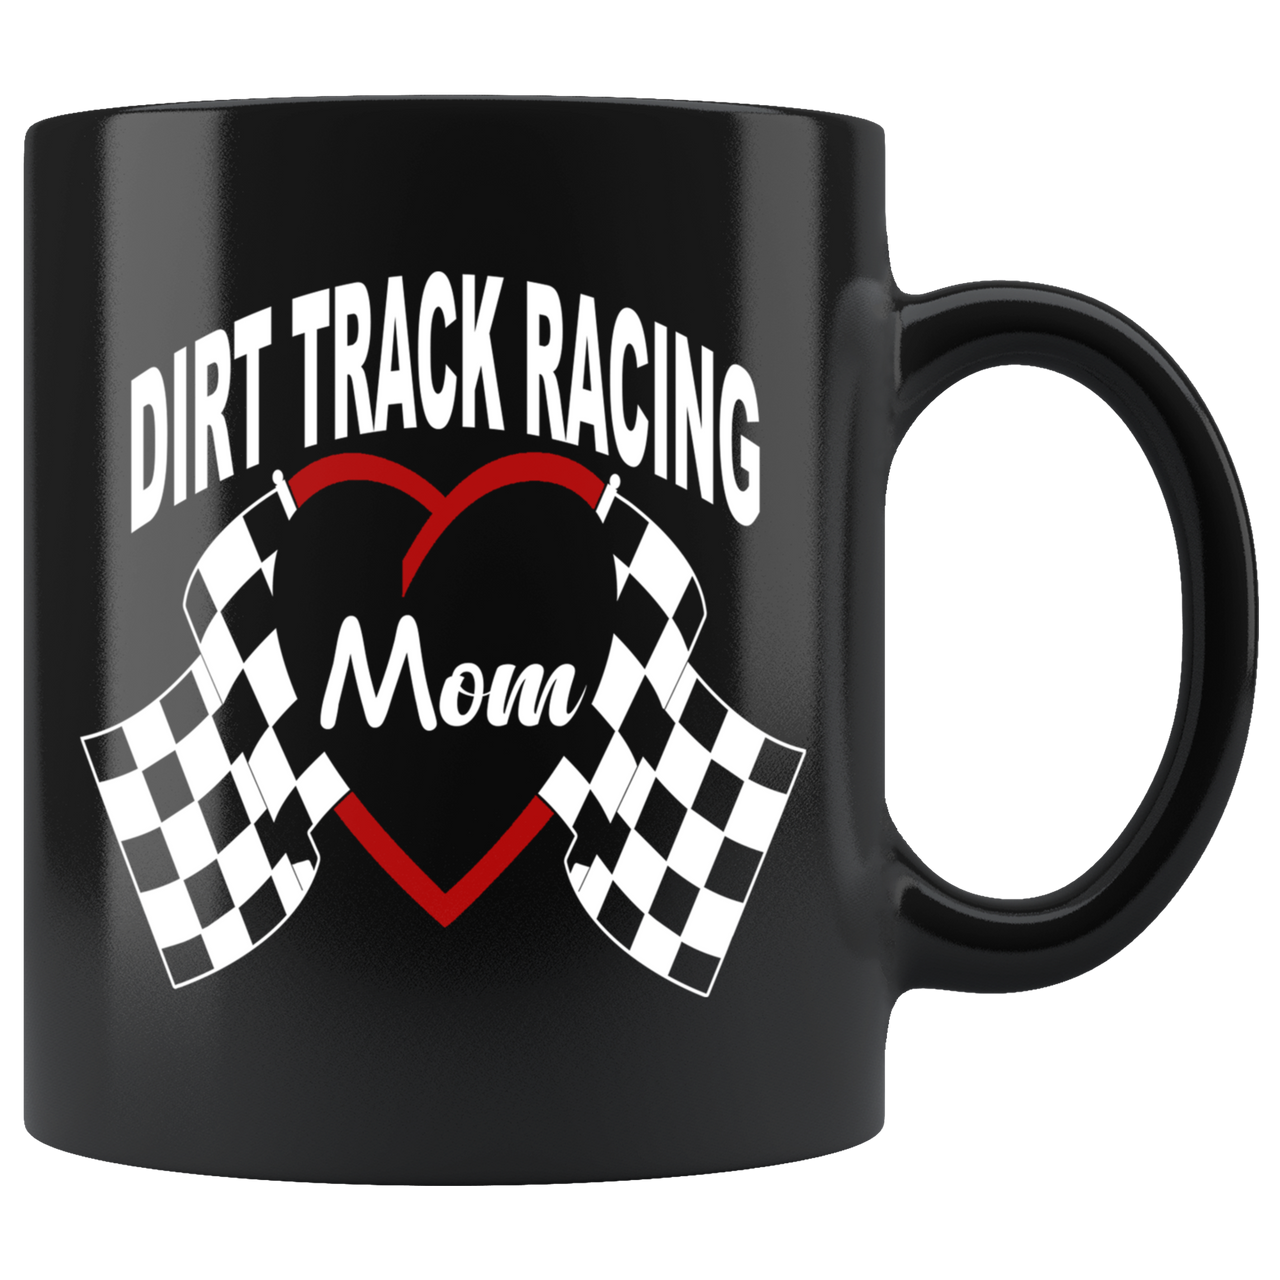 Dirt Track Racing Mom Mug